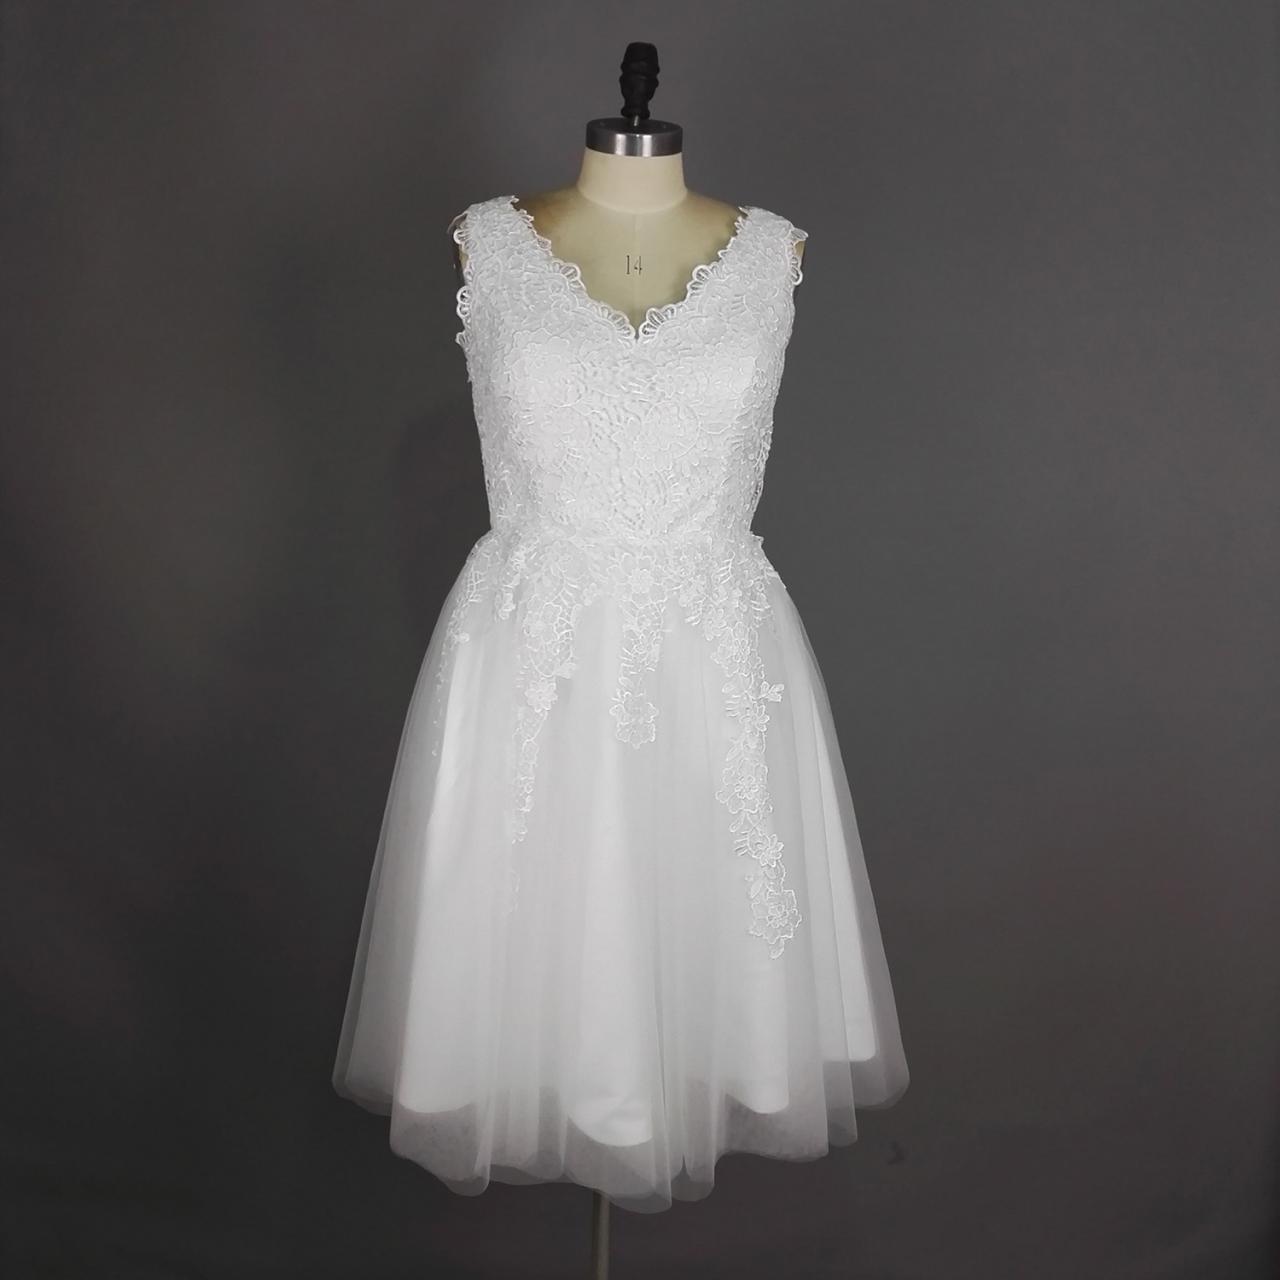 White Lace Homecoming Dresses, Cute Graduation Dresses, V Neck Homecoming Dress, Short Prom Dresses